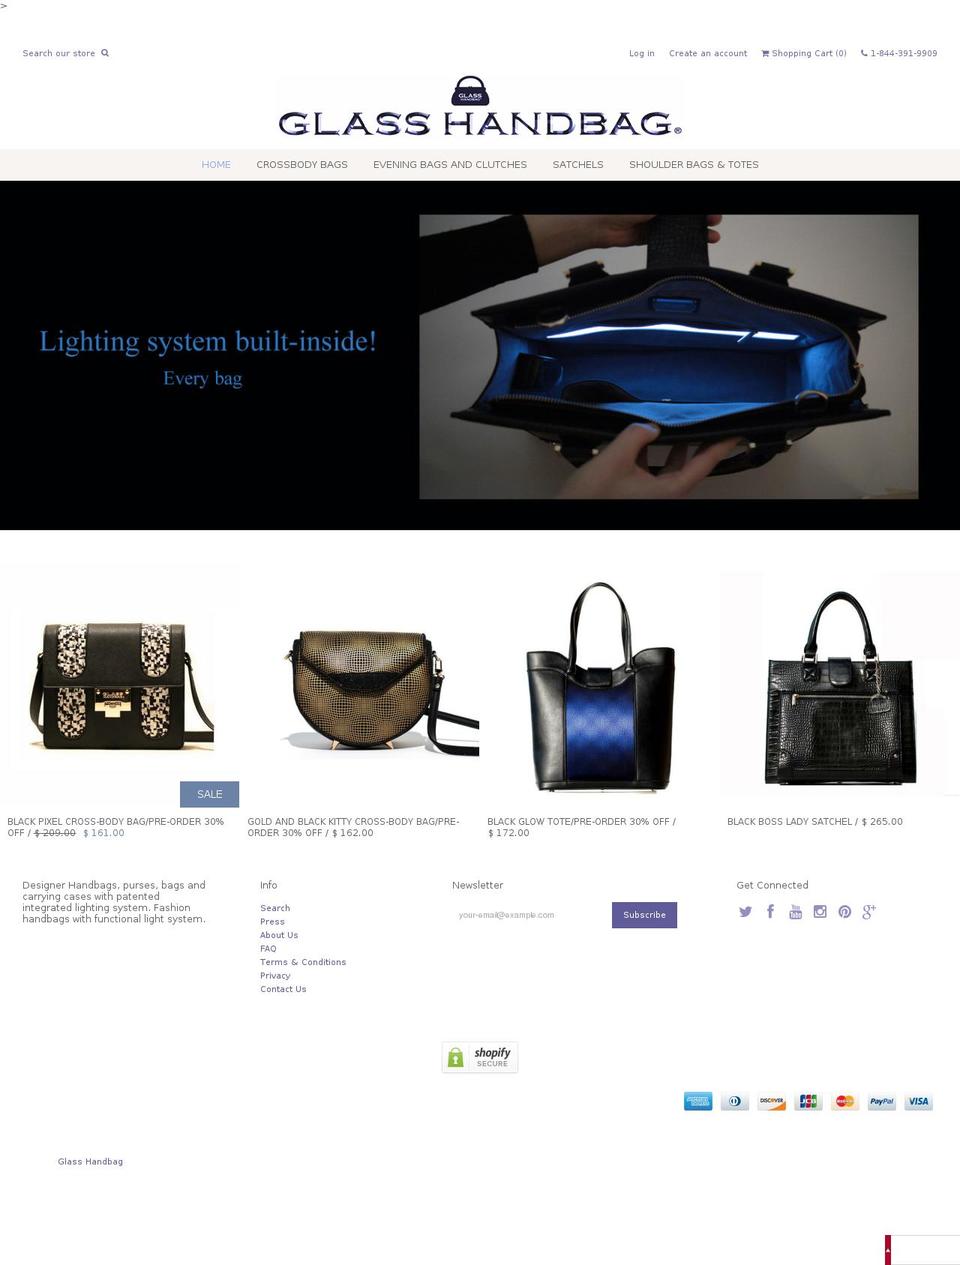 glasshandbag.us shopify website screenshot